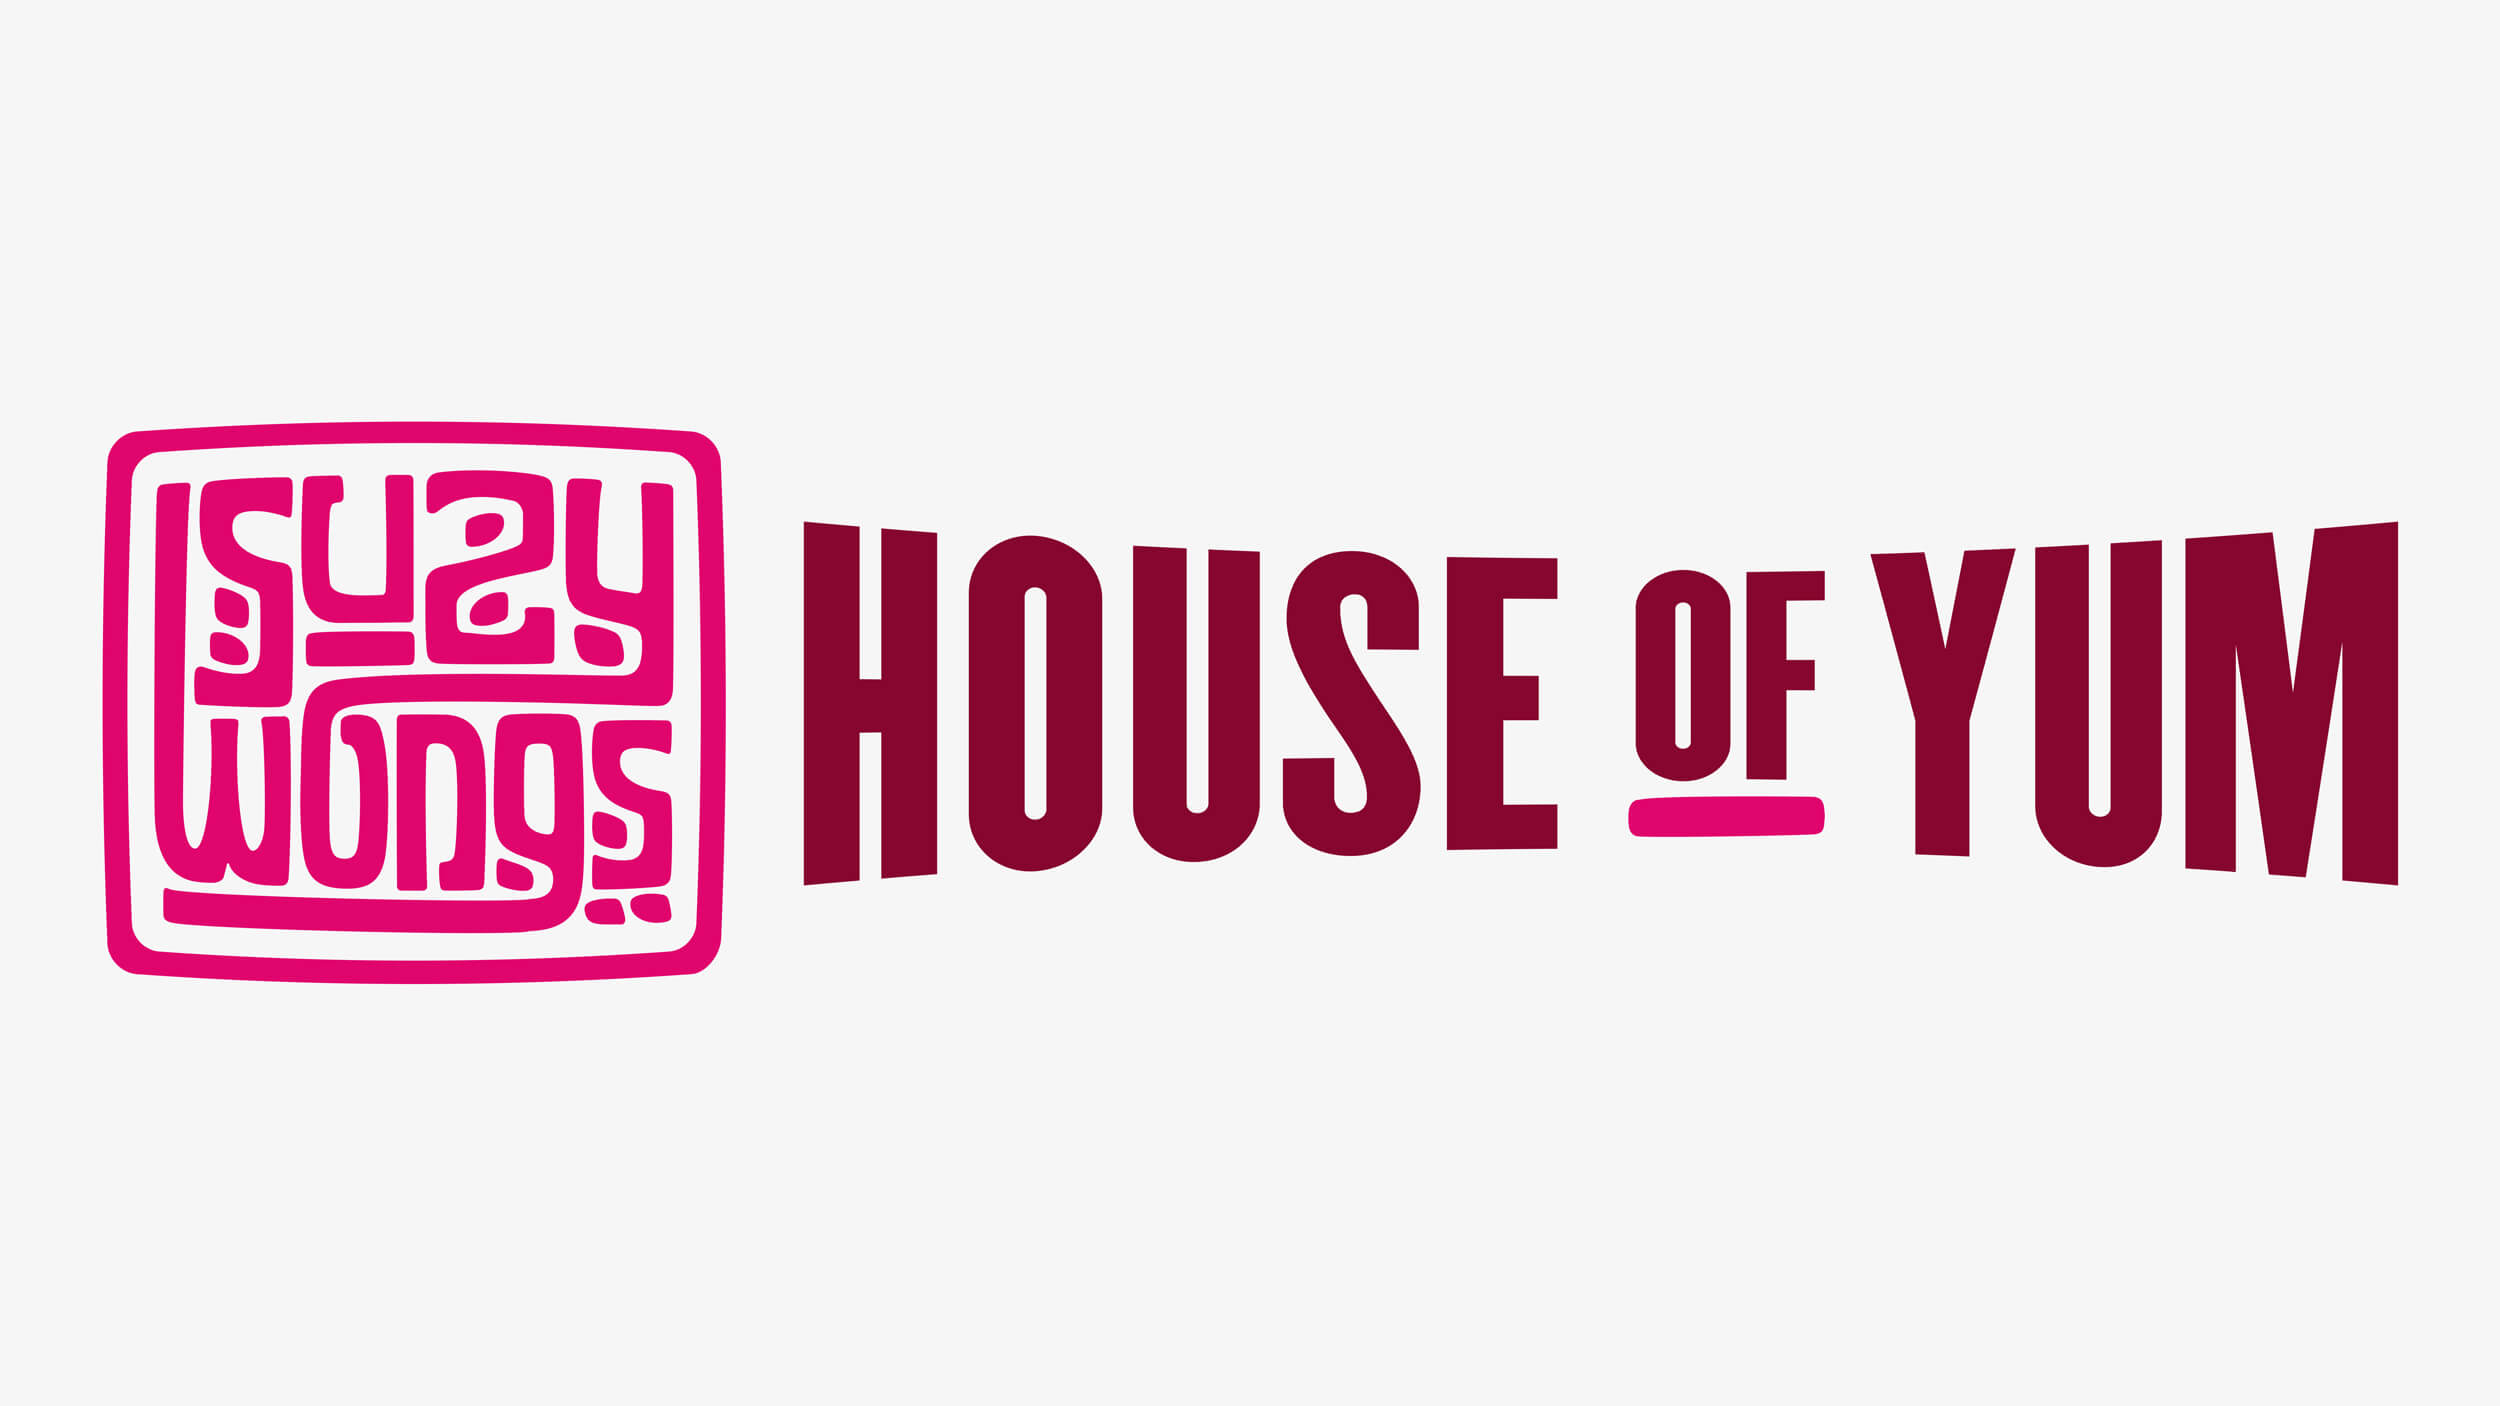 Full horizontal logo design for Suzy Wongs House of Yum restaurant in Nashville, Tennessee